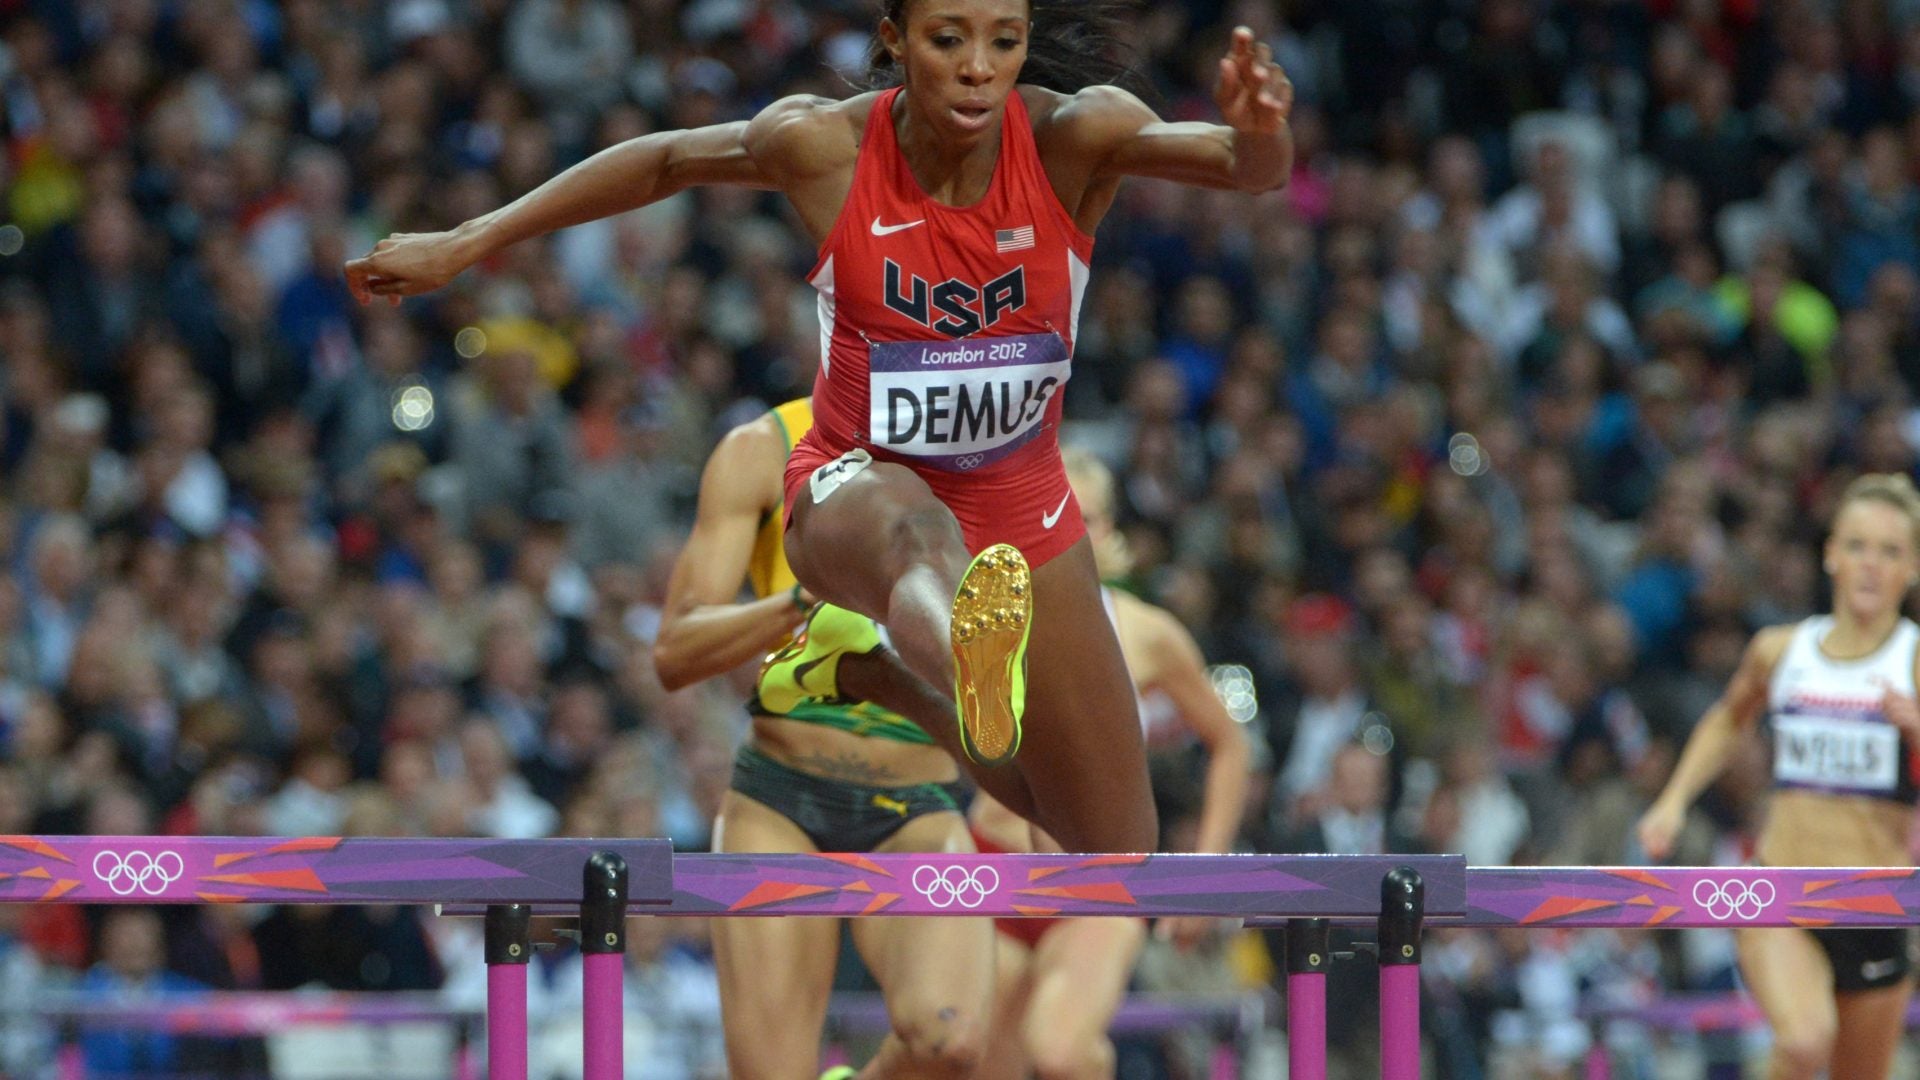 2012 U.S. Olympic 400m Hurdler Lashinda Demus Will Finally Get Her Gold Medal Moment in Paris